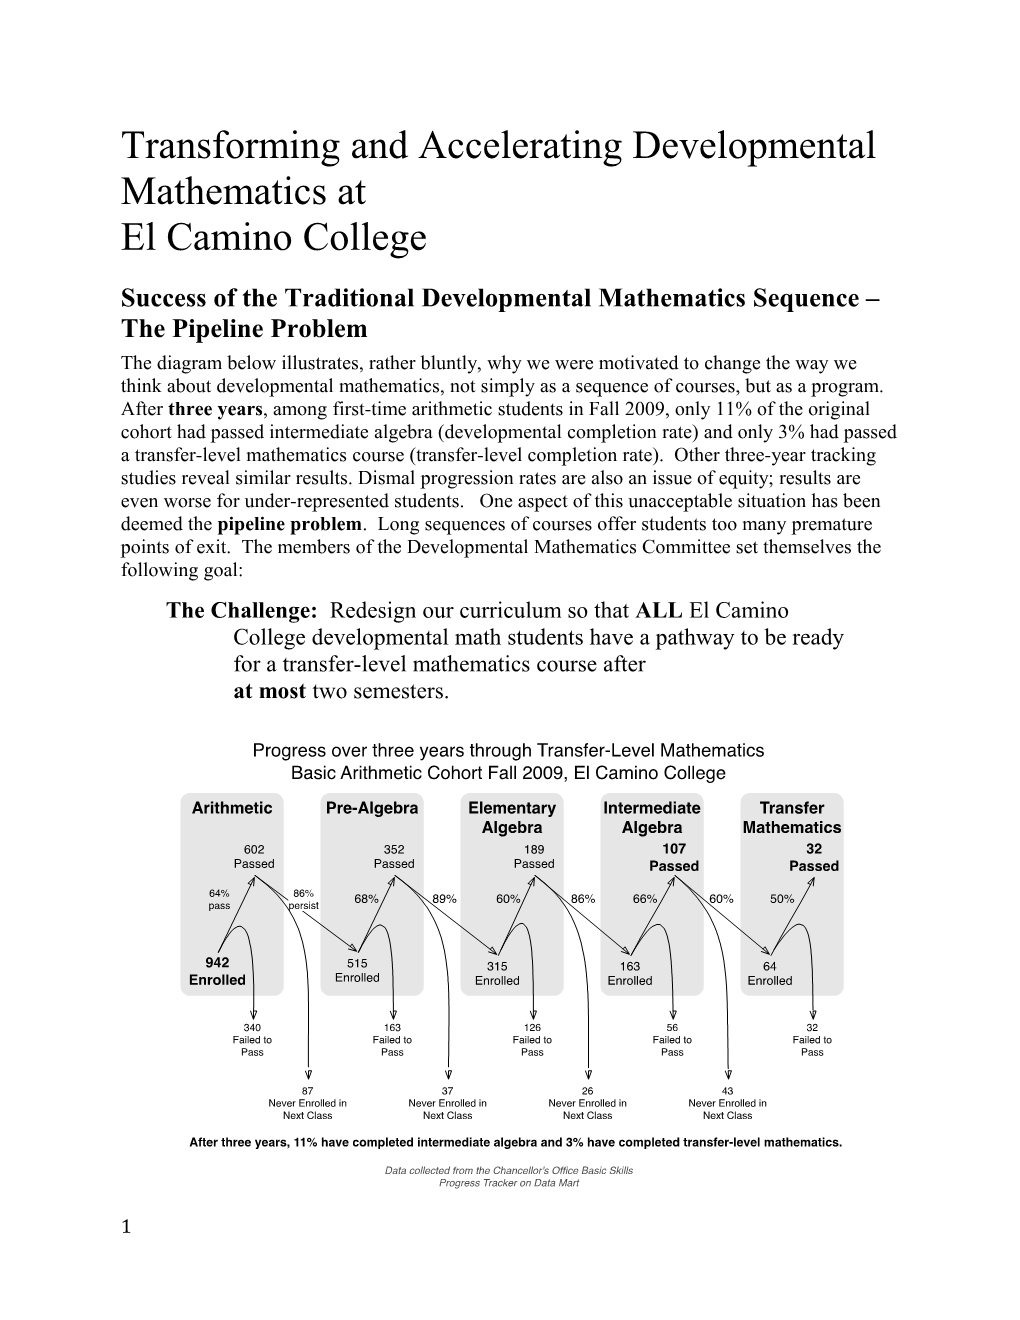 Transforming and Accelerating Developmental Mathematics At